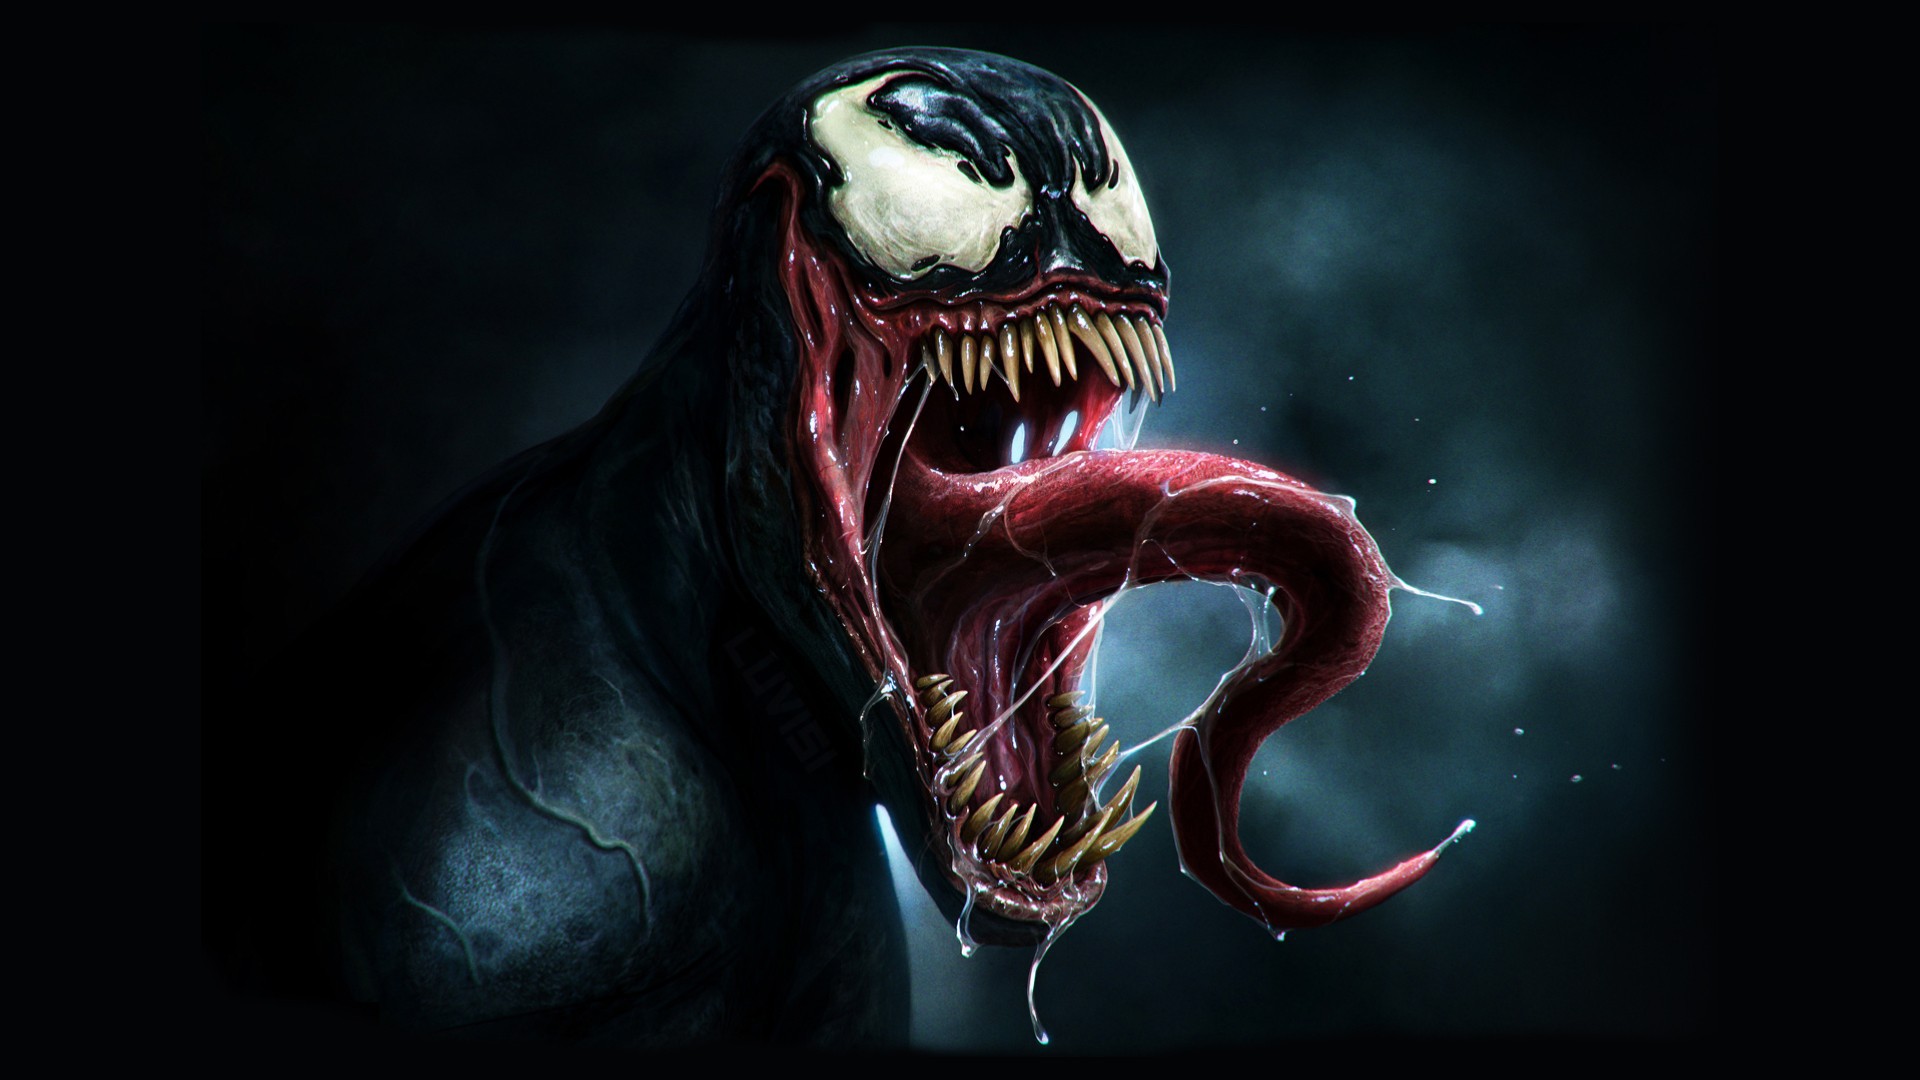 Smile Fangs Marvel comics comics Venom wallpapers and images 1920x1080